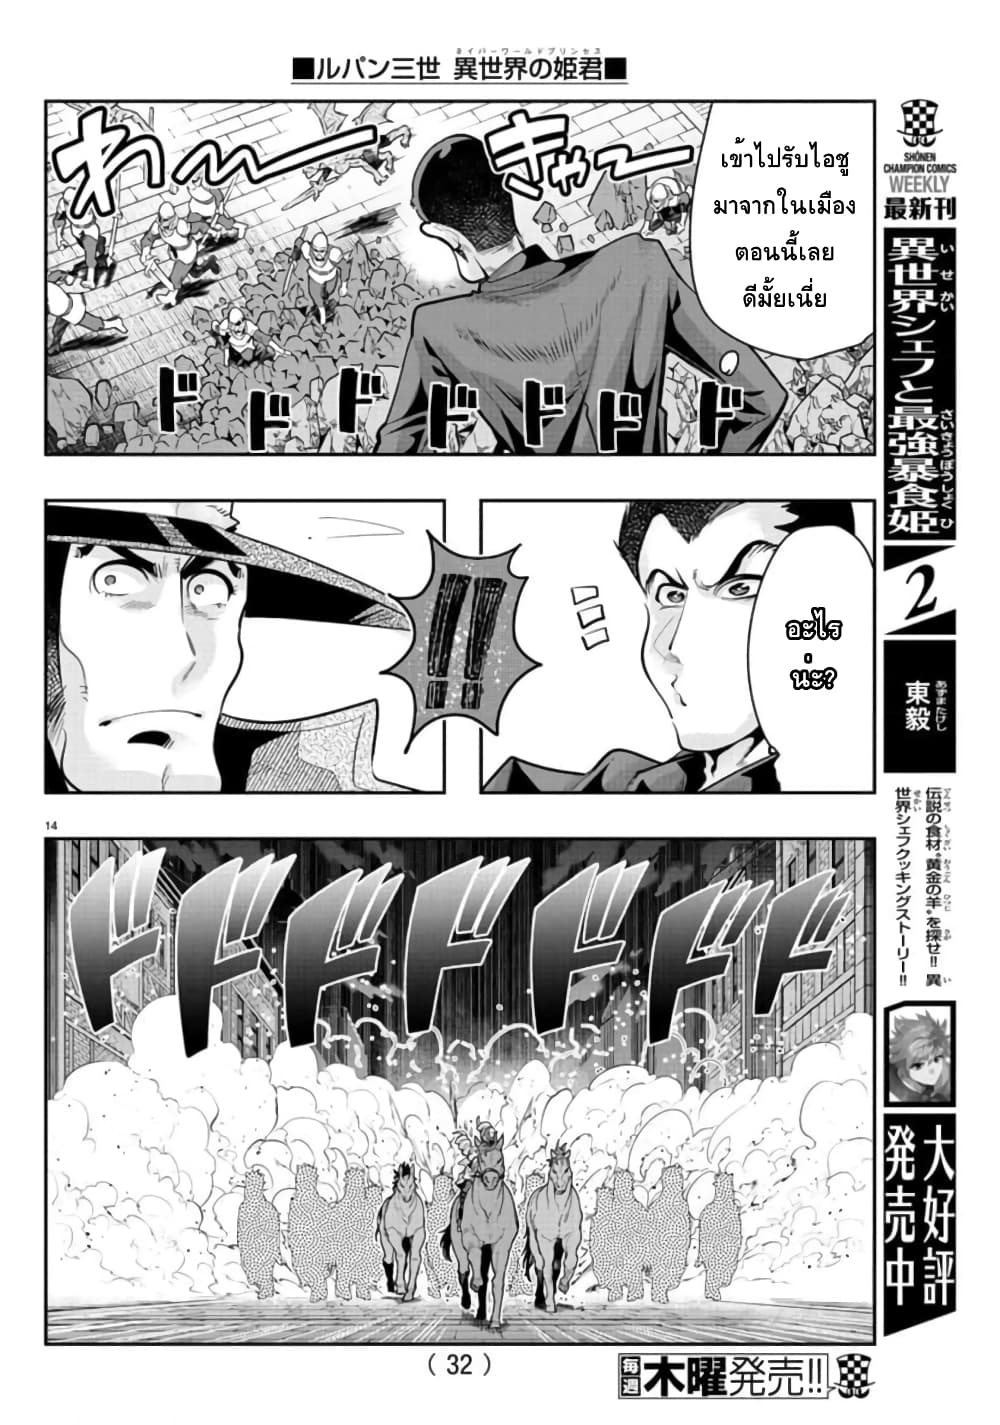 Lupin Sansei Isekai no Himegimi 10-รวมพล! แก๊งค์ลูแปง VS เซนิกาตะ in ต่างโลก